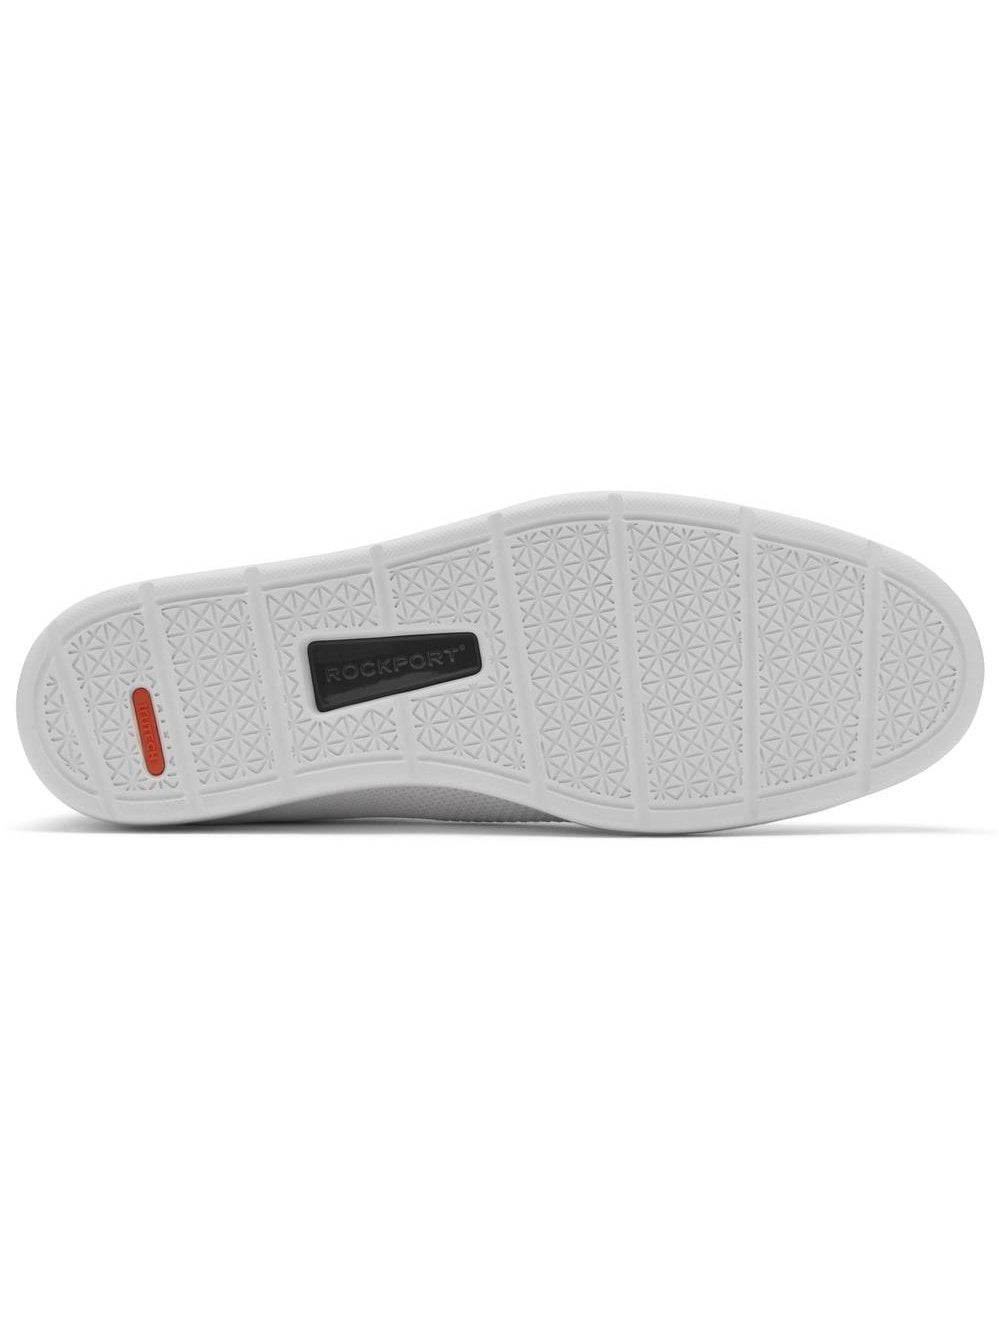 Rockport Mens Total Motion Lite Mesh Sneaker White CI5208.